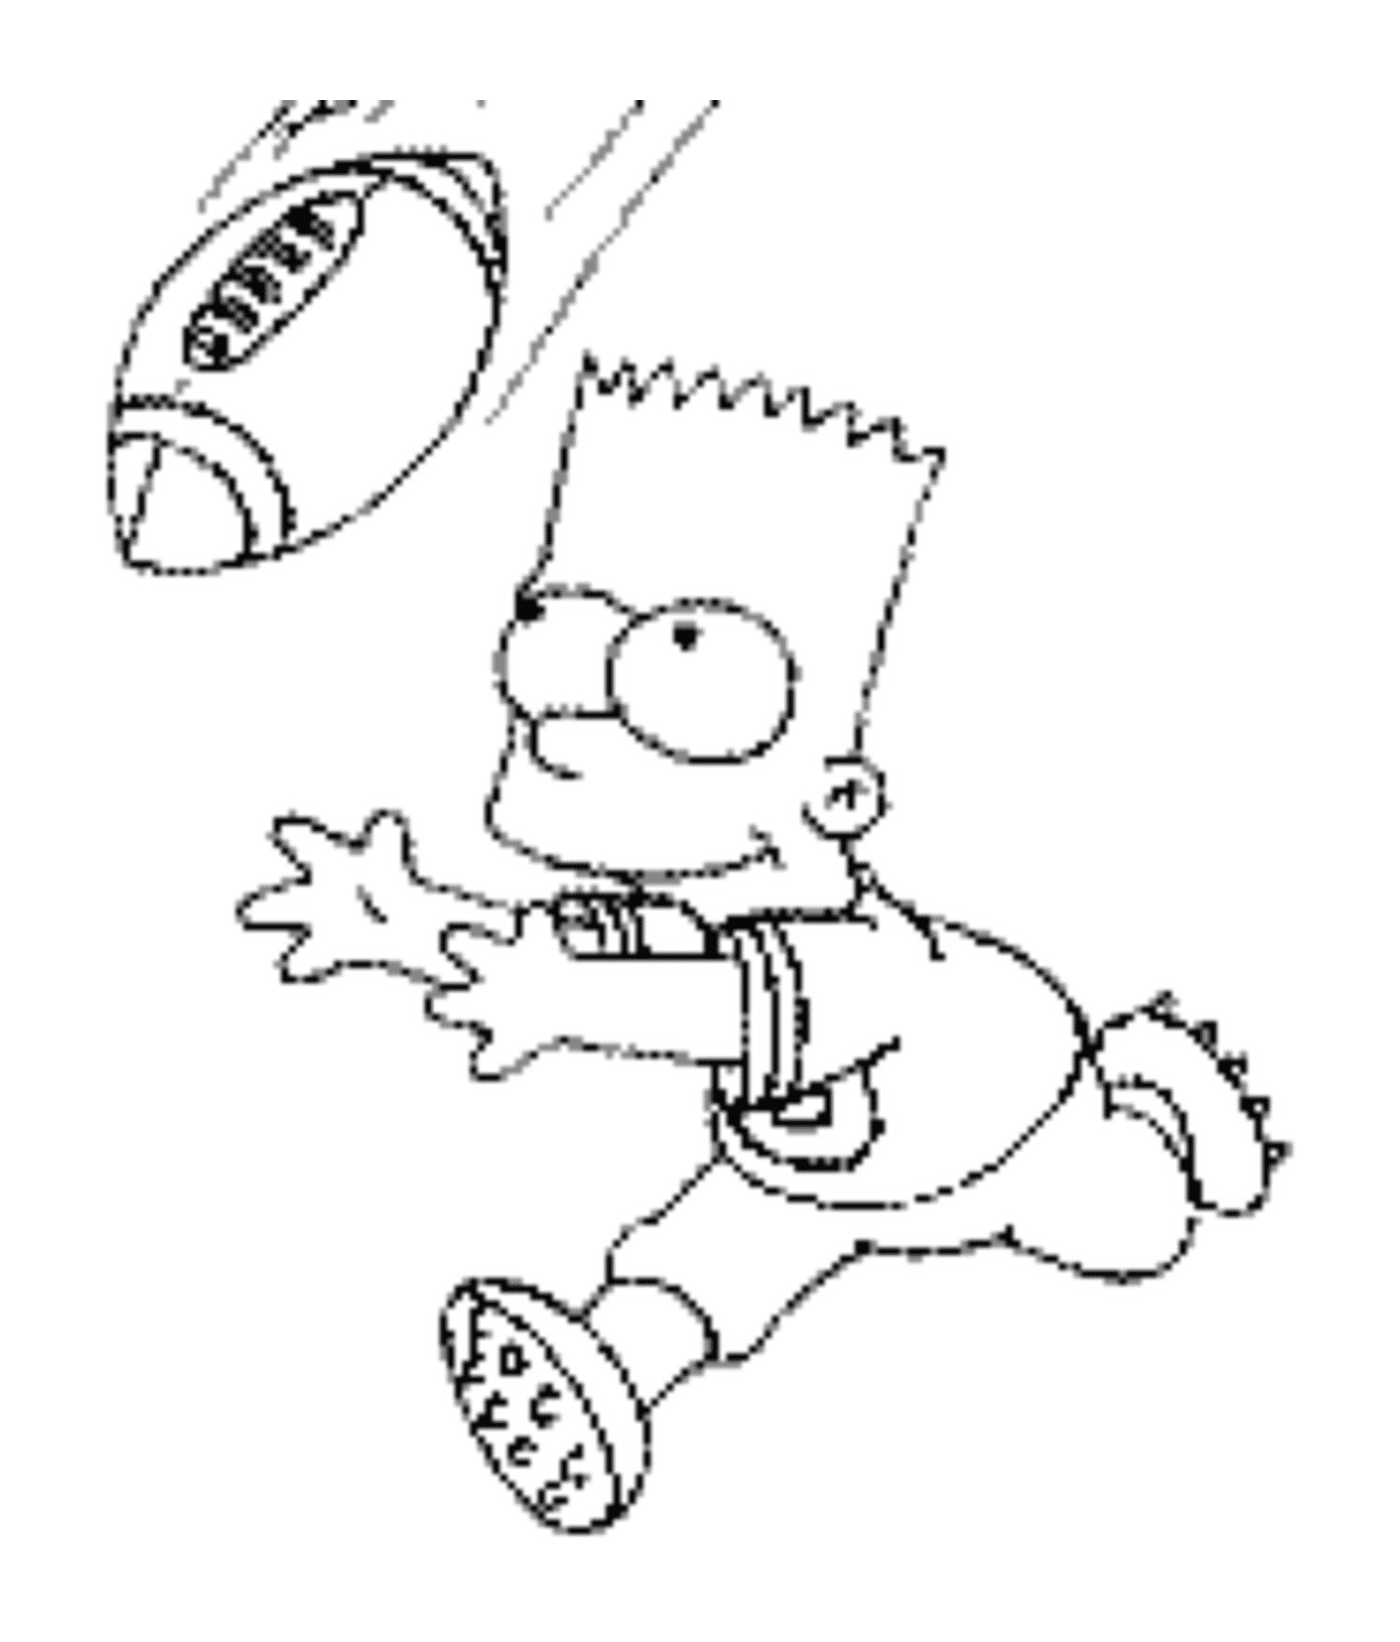  Bart plays American football 